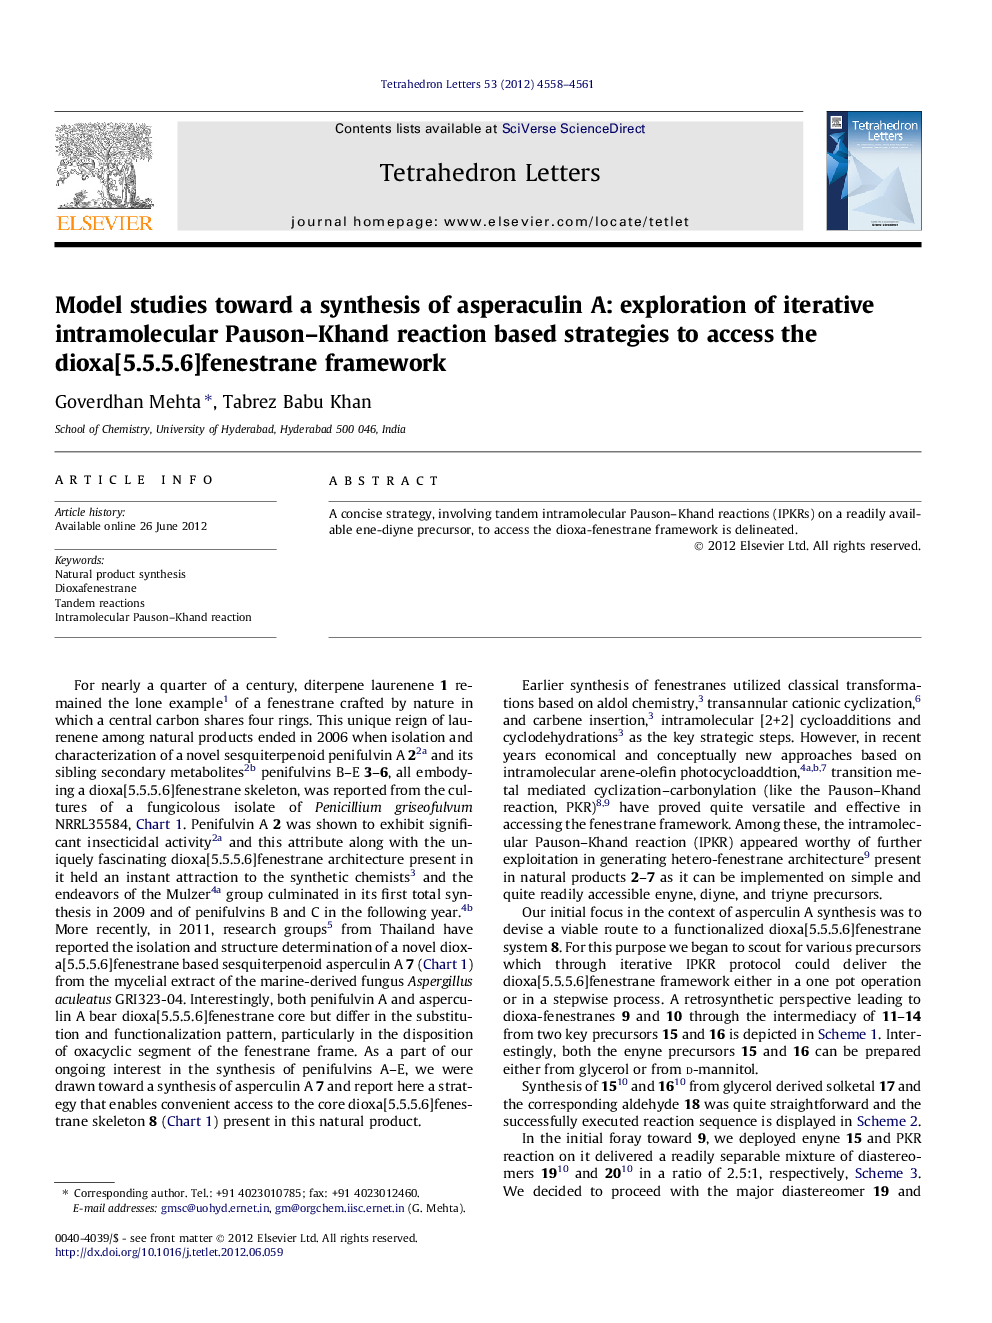 Model studies toward a synthesis of asperaculin A: exploration of iterative intramolecular Pauson-Khand reaction based strategies to access the dioxa[5.5.5.6]fenestrane framework